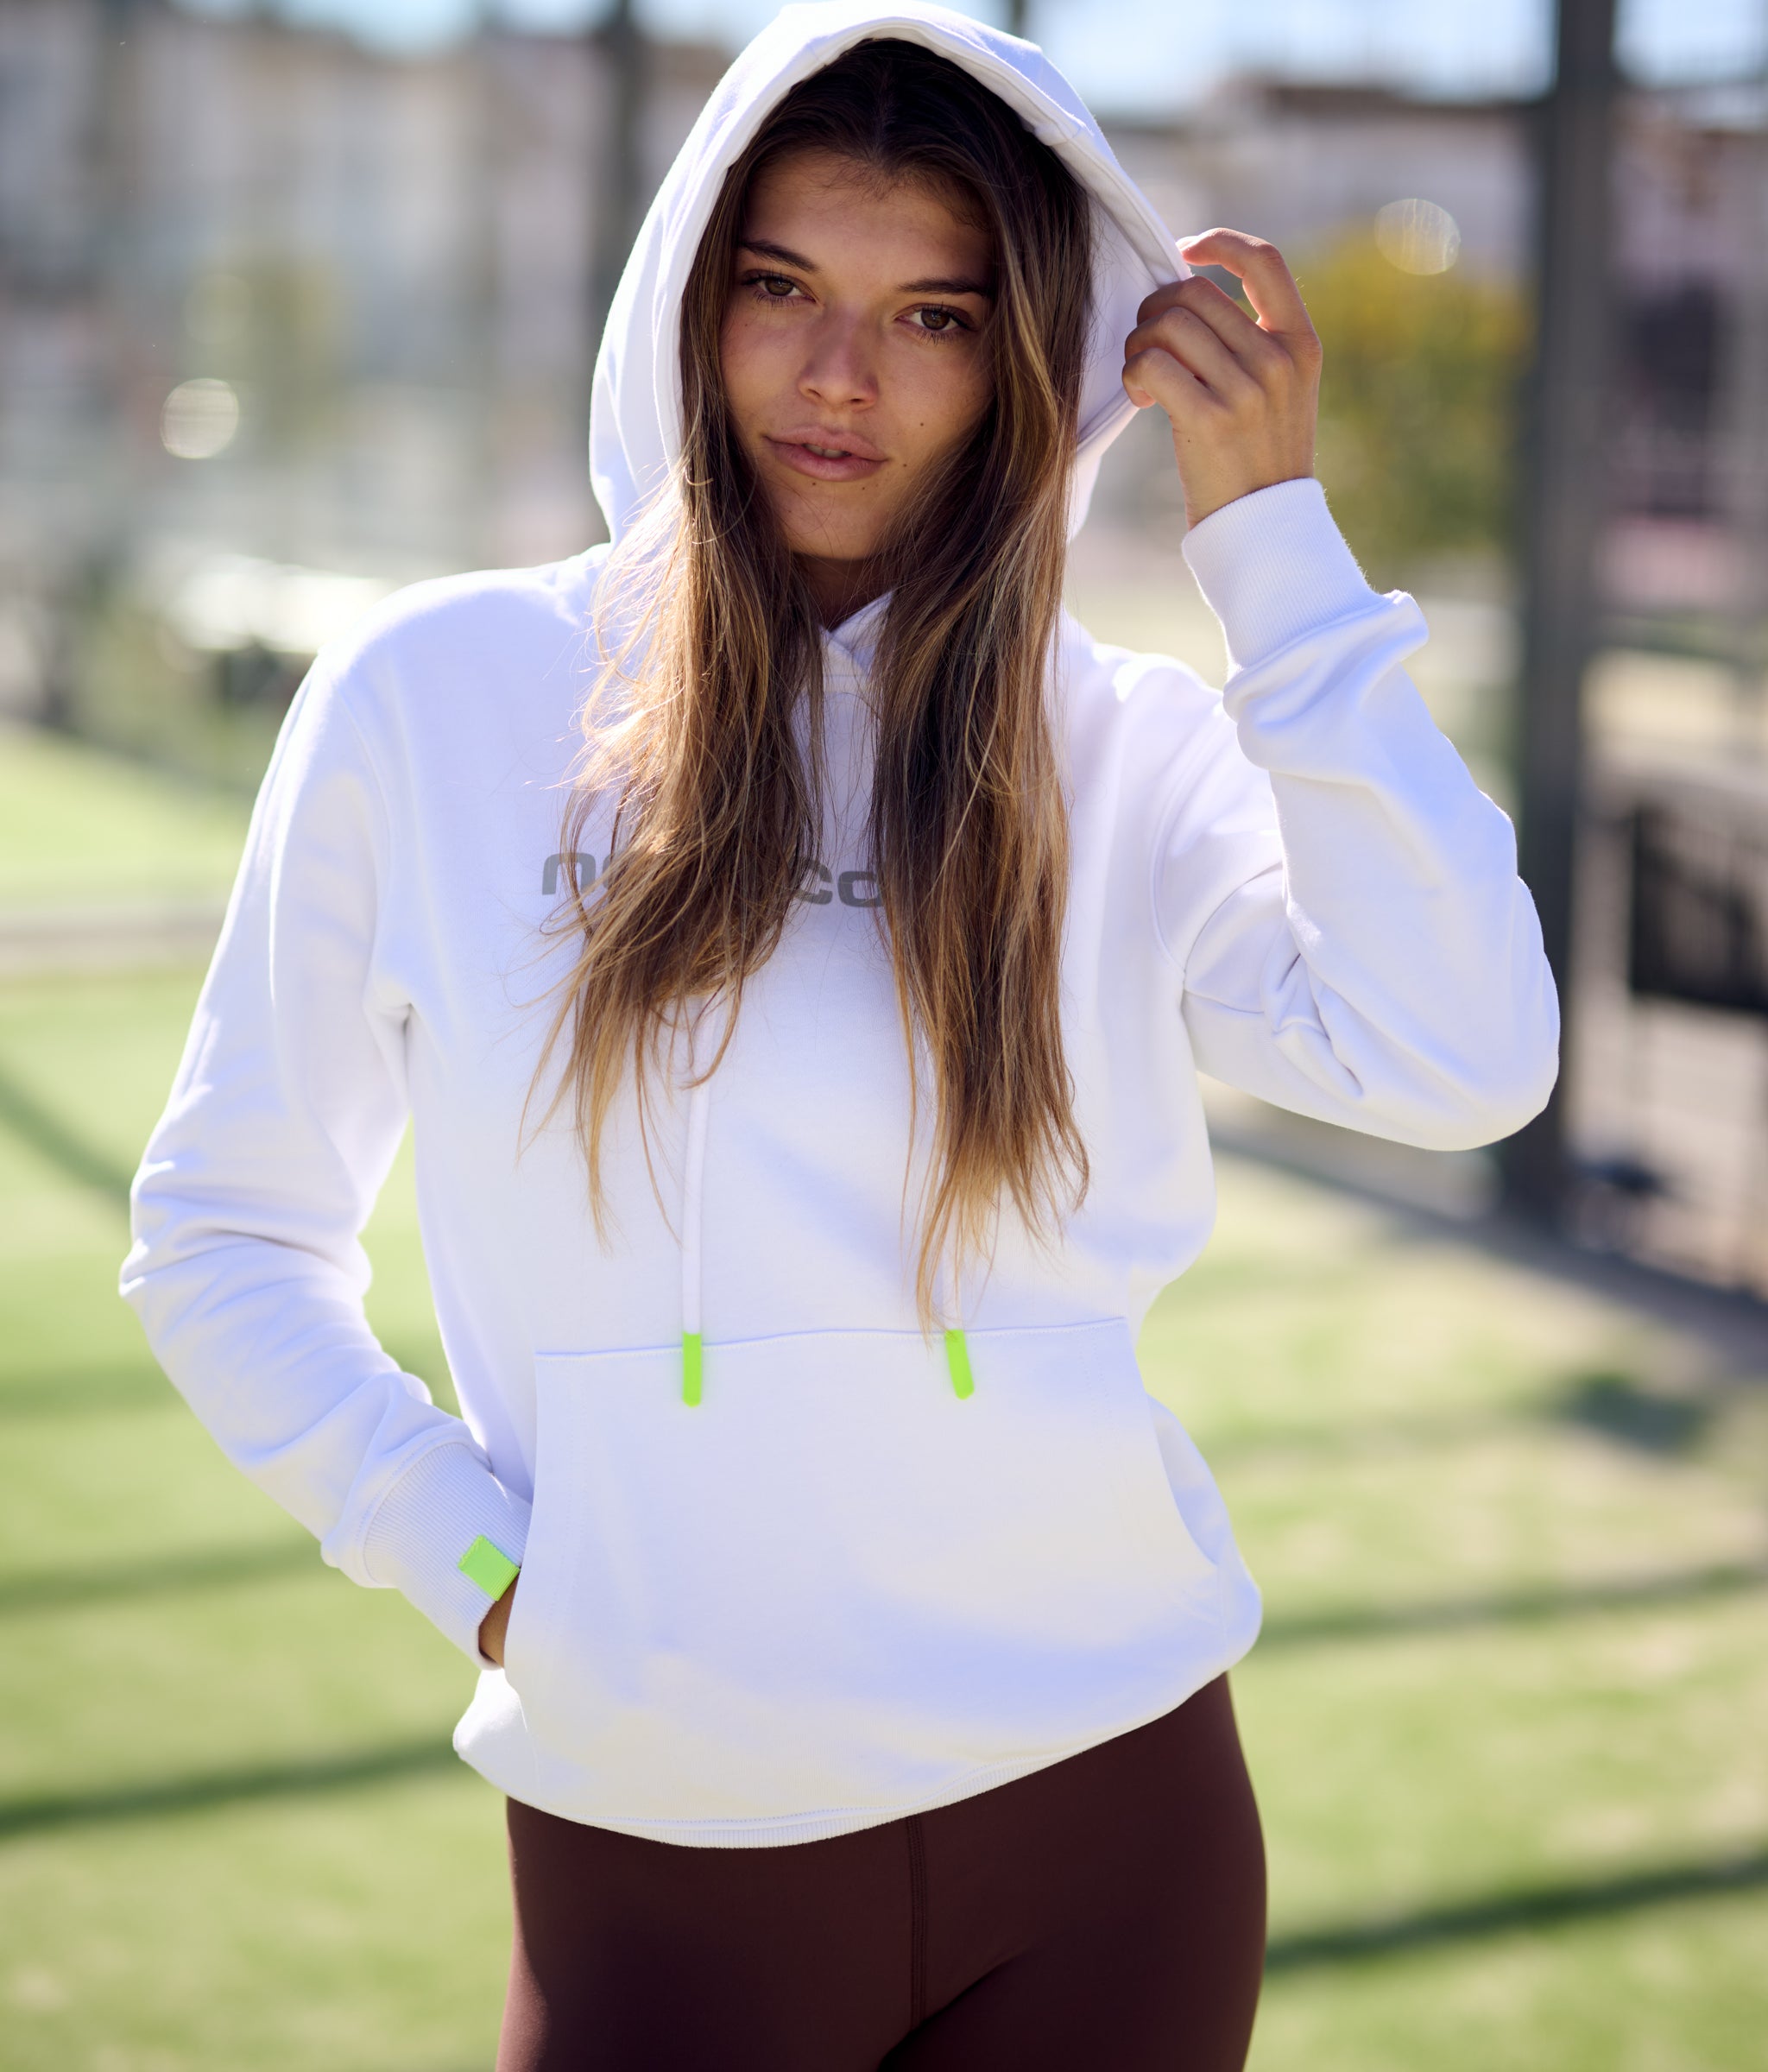 nordicdots women white hoodie tennis